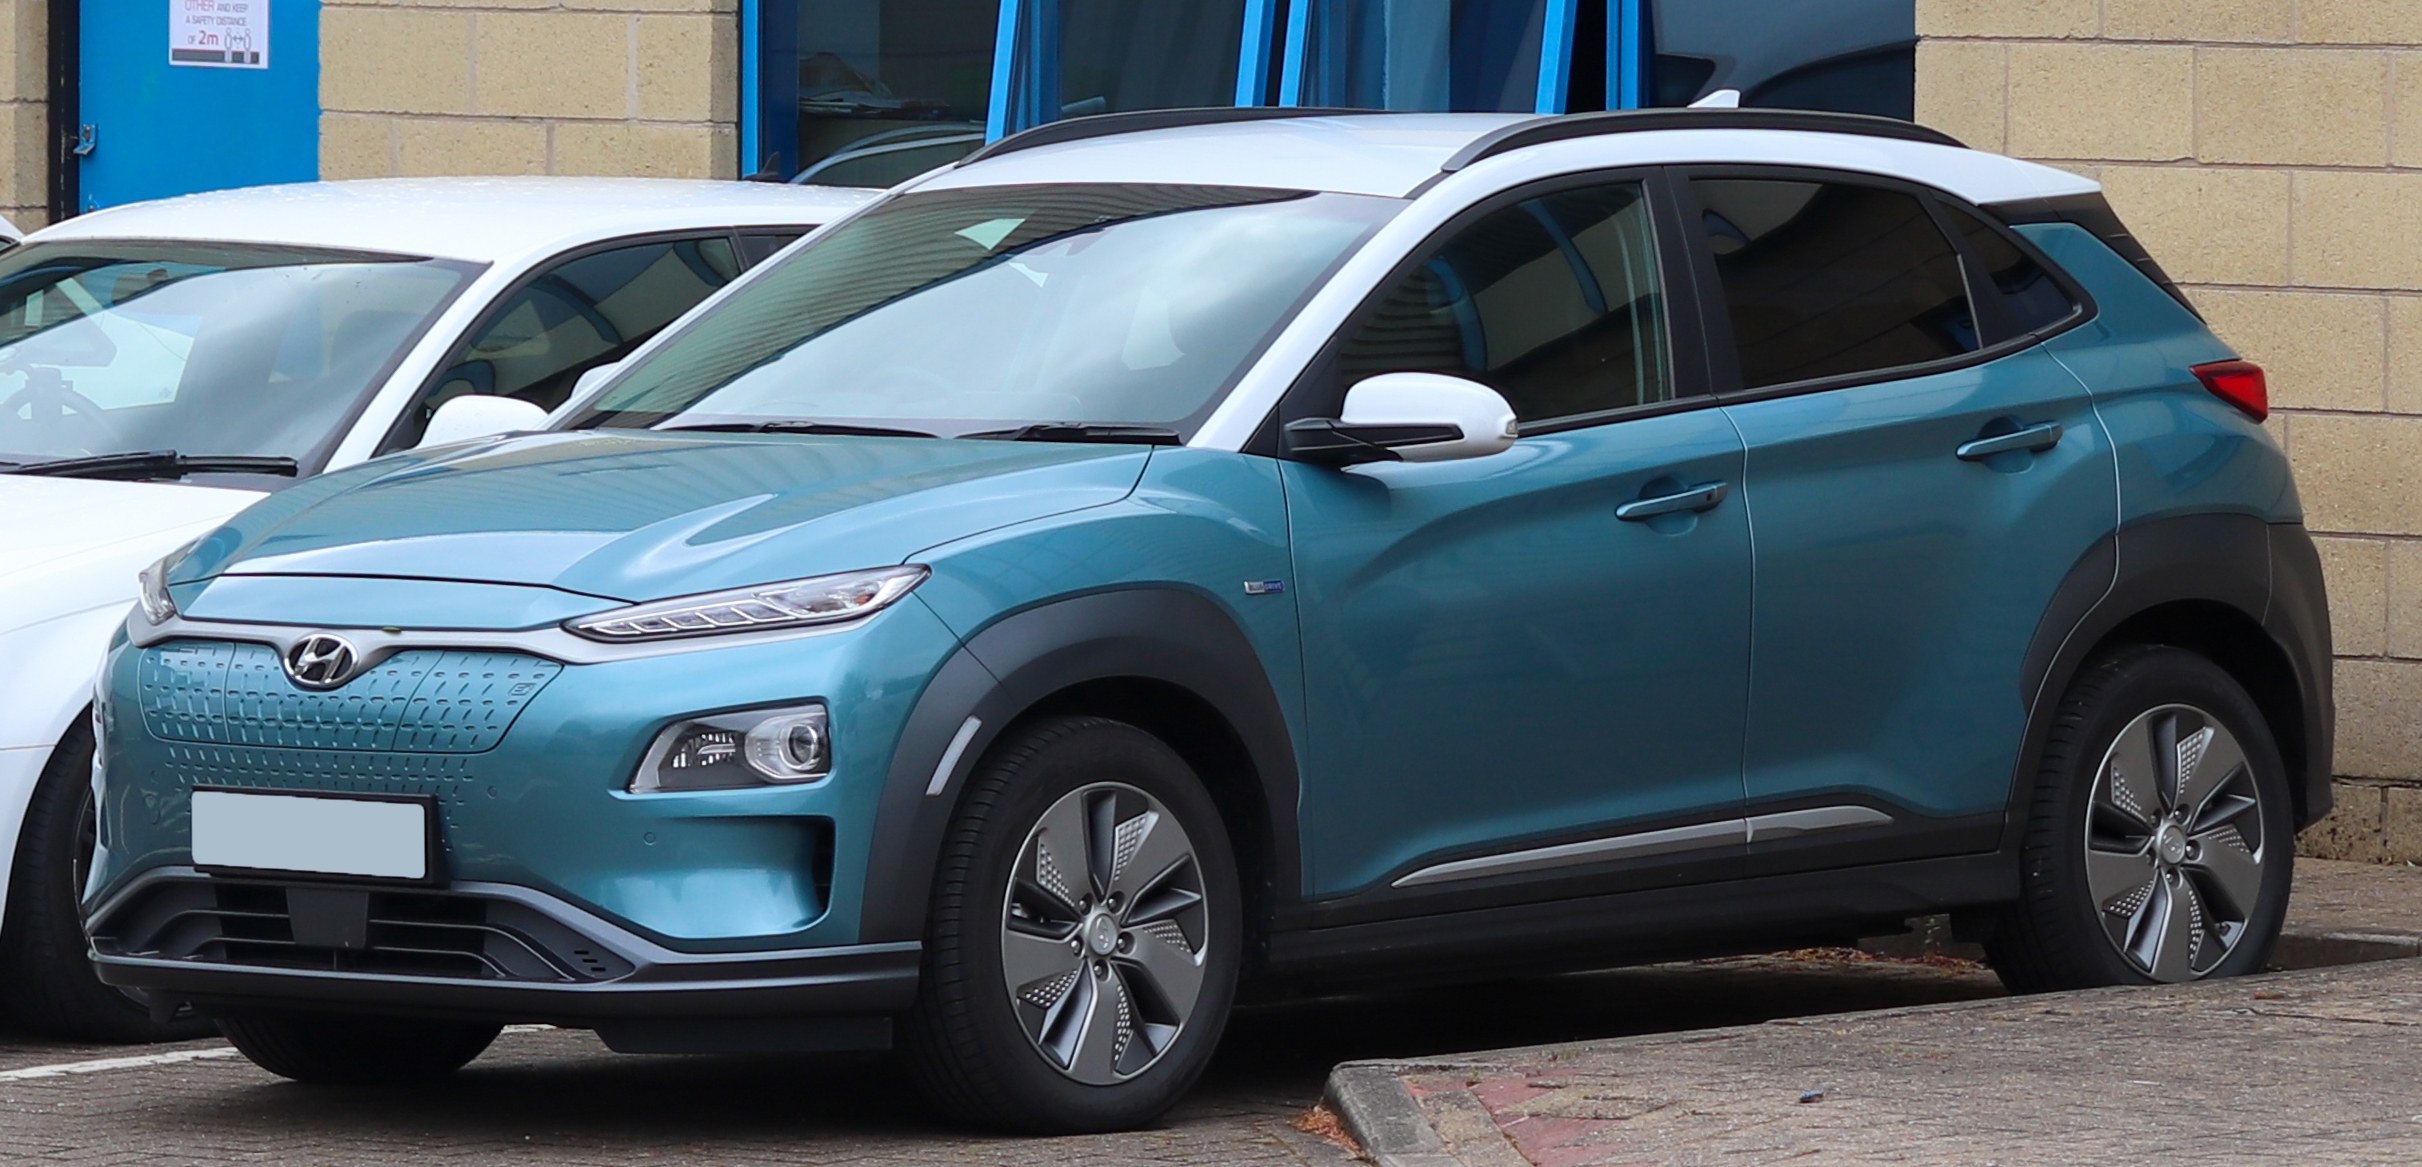 File:2019 Hyundai Kona Premium SE EV Automatic.jpg - Wikimedia Commons